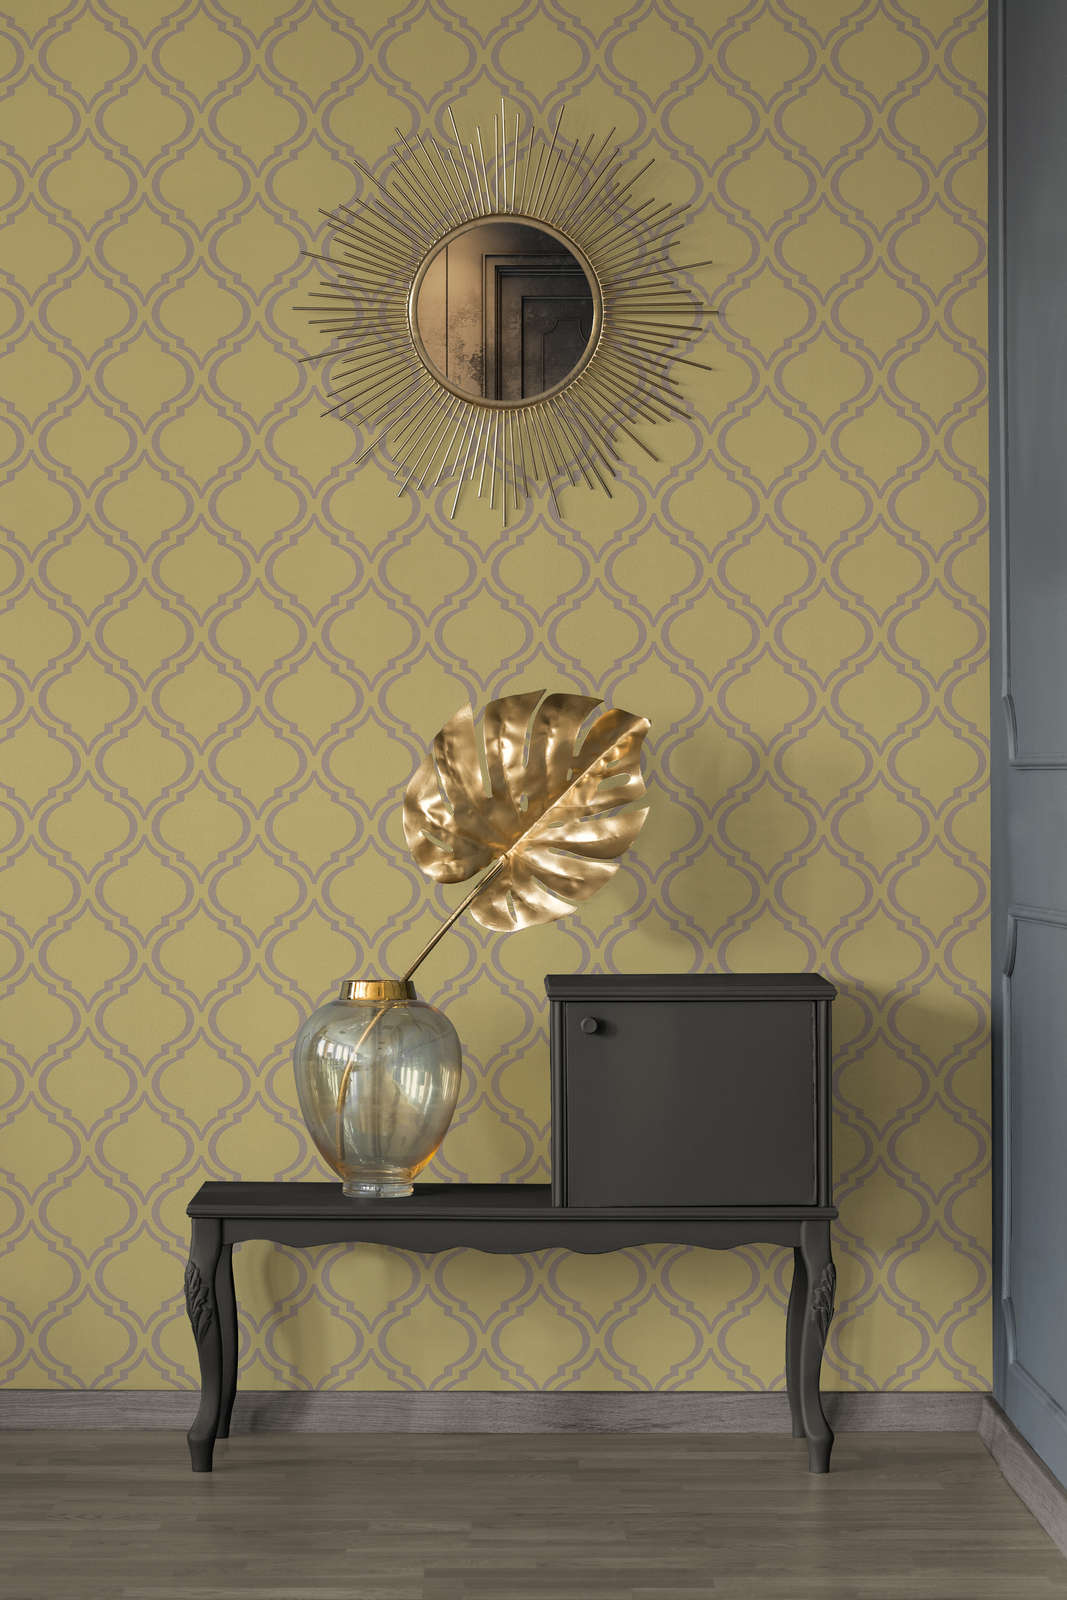             Retro wallpaper with glossy Art Deco pattern - yellow, green, grey
        